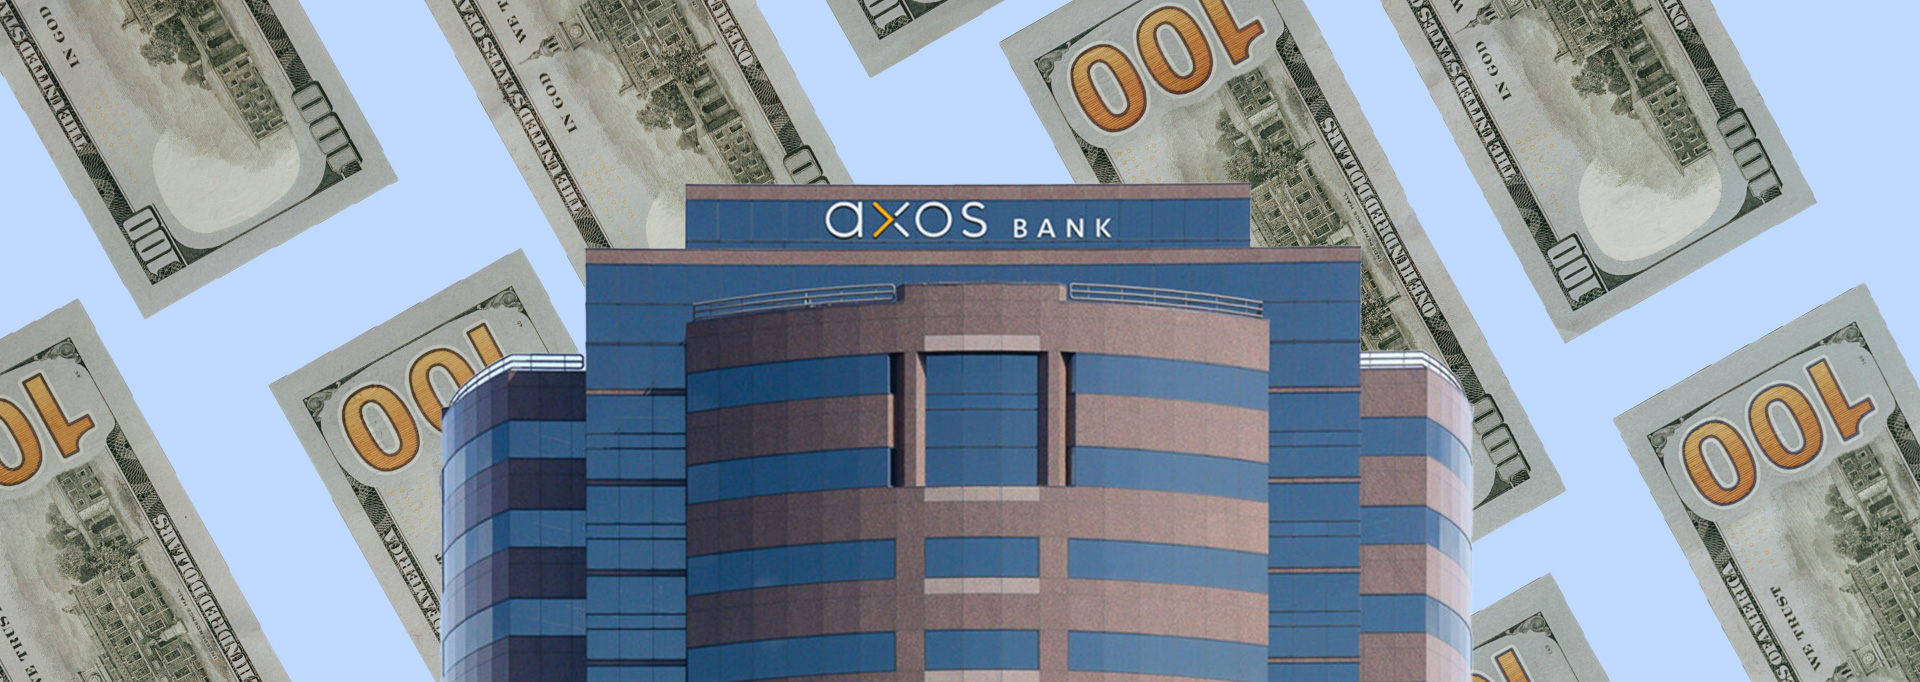 Axos Bank over money background